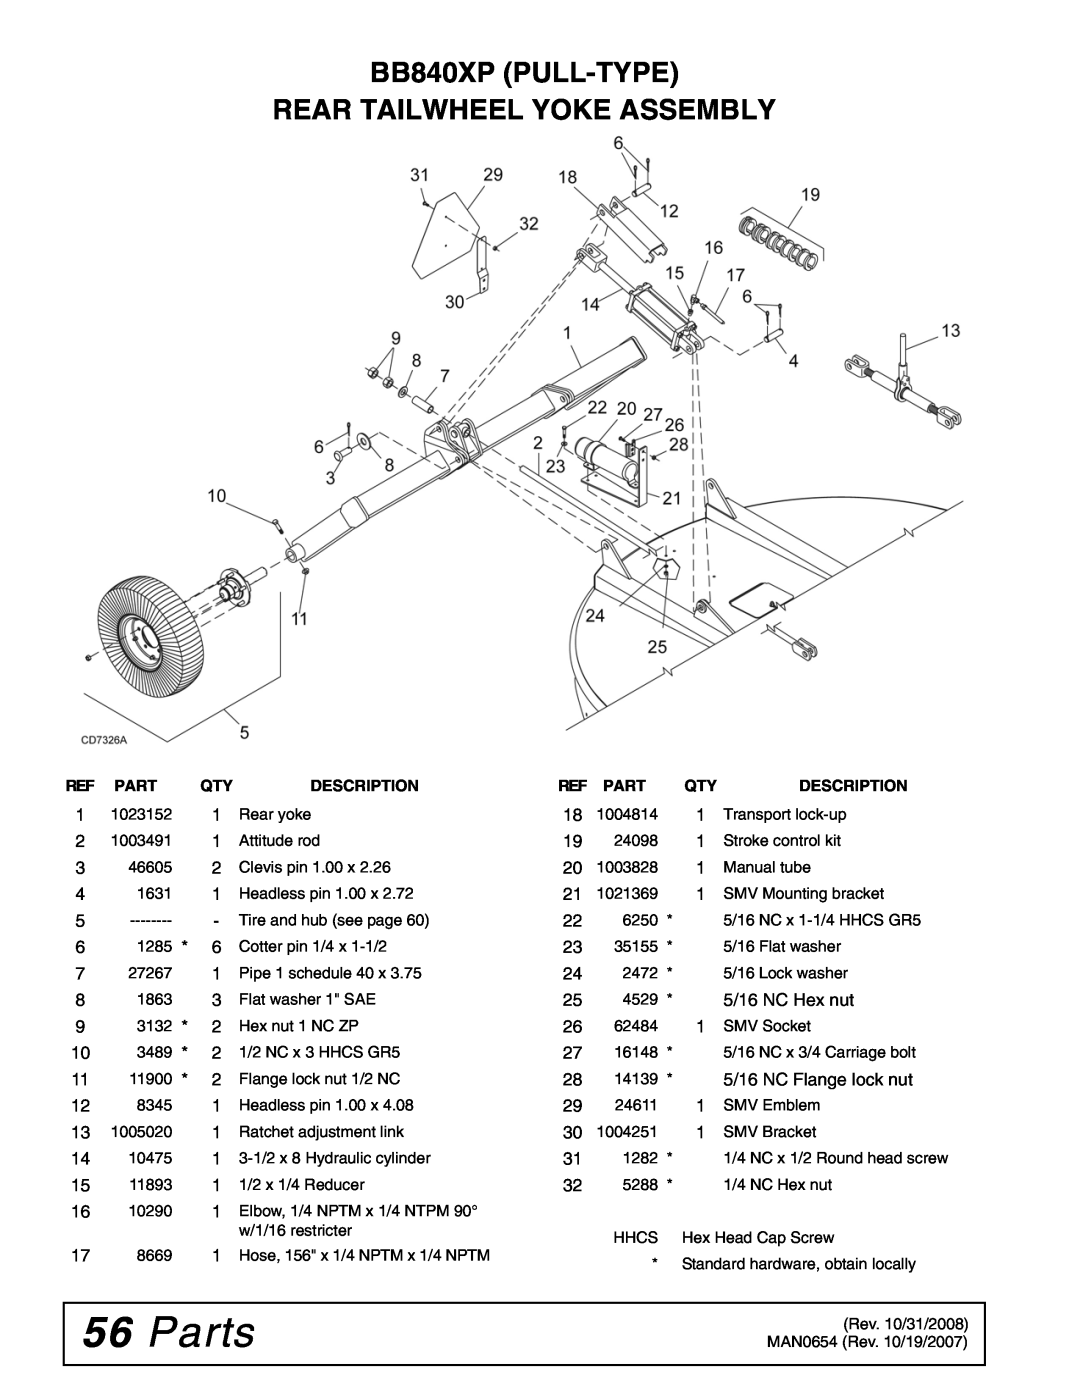 Woods Equipment BB600X, BB720X manual Parts, BB840XP PULL-TYPE REAR TAILWHEEL YOKE ASSEMBLY, Description 